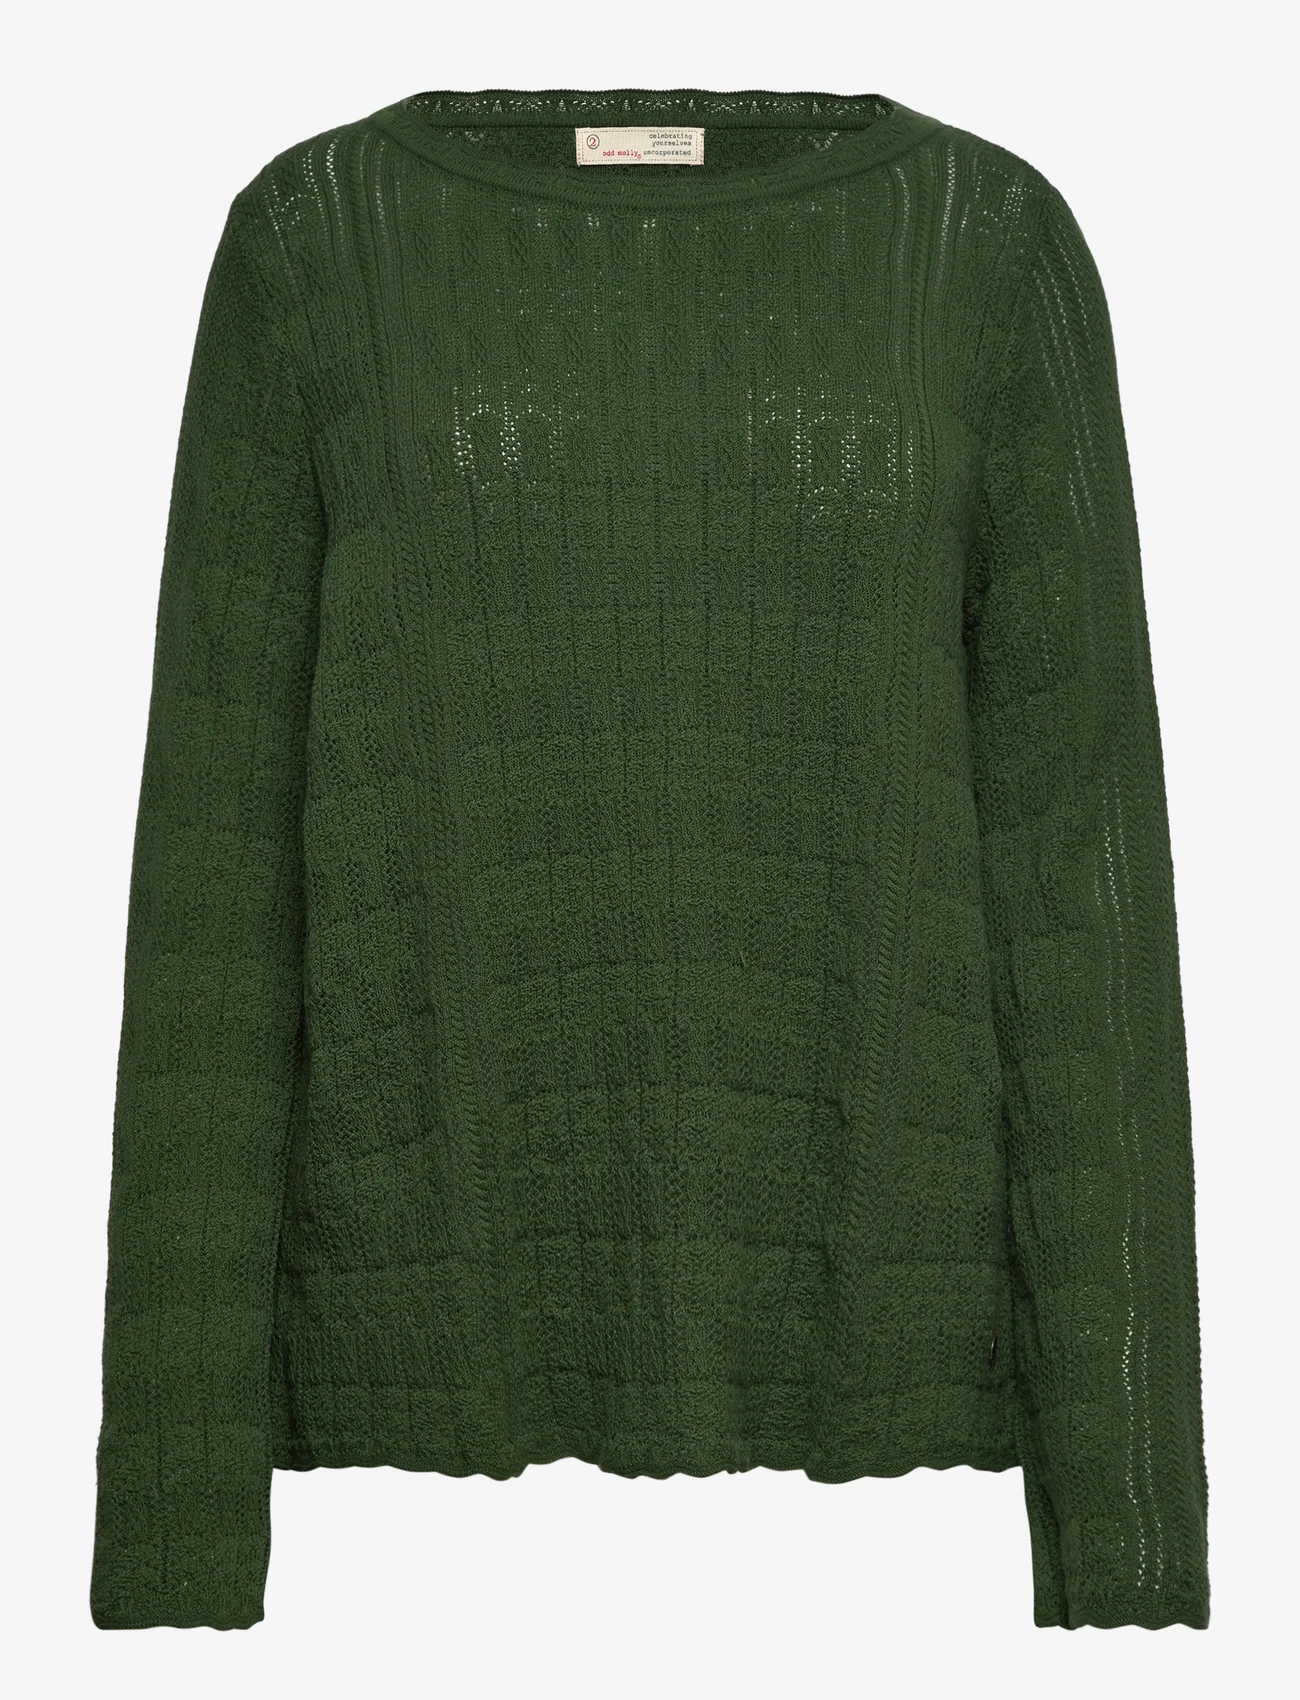 ODD MOLLY - Eden Sweater - truien - favorite green - 0